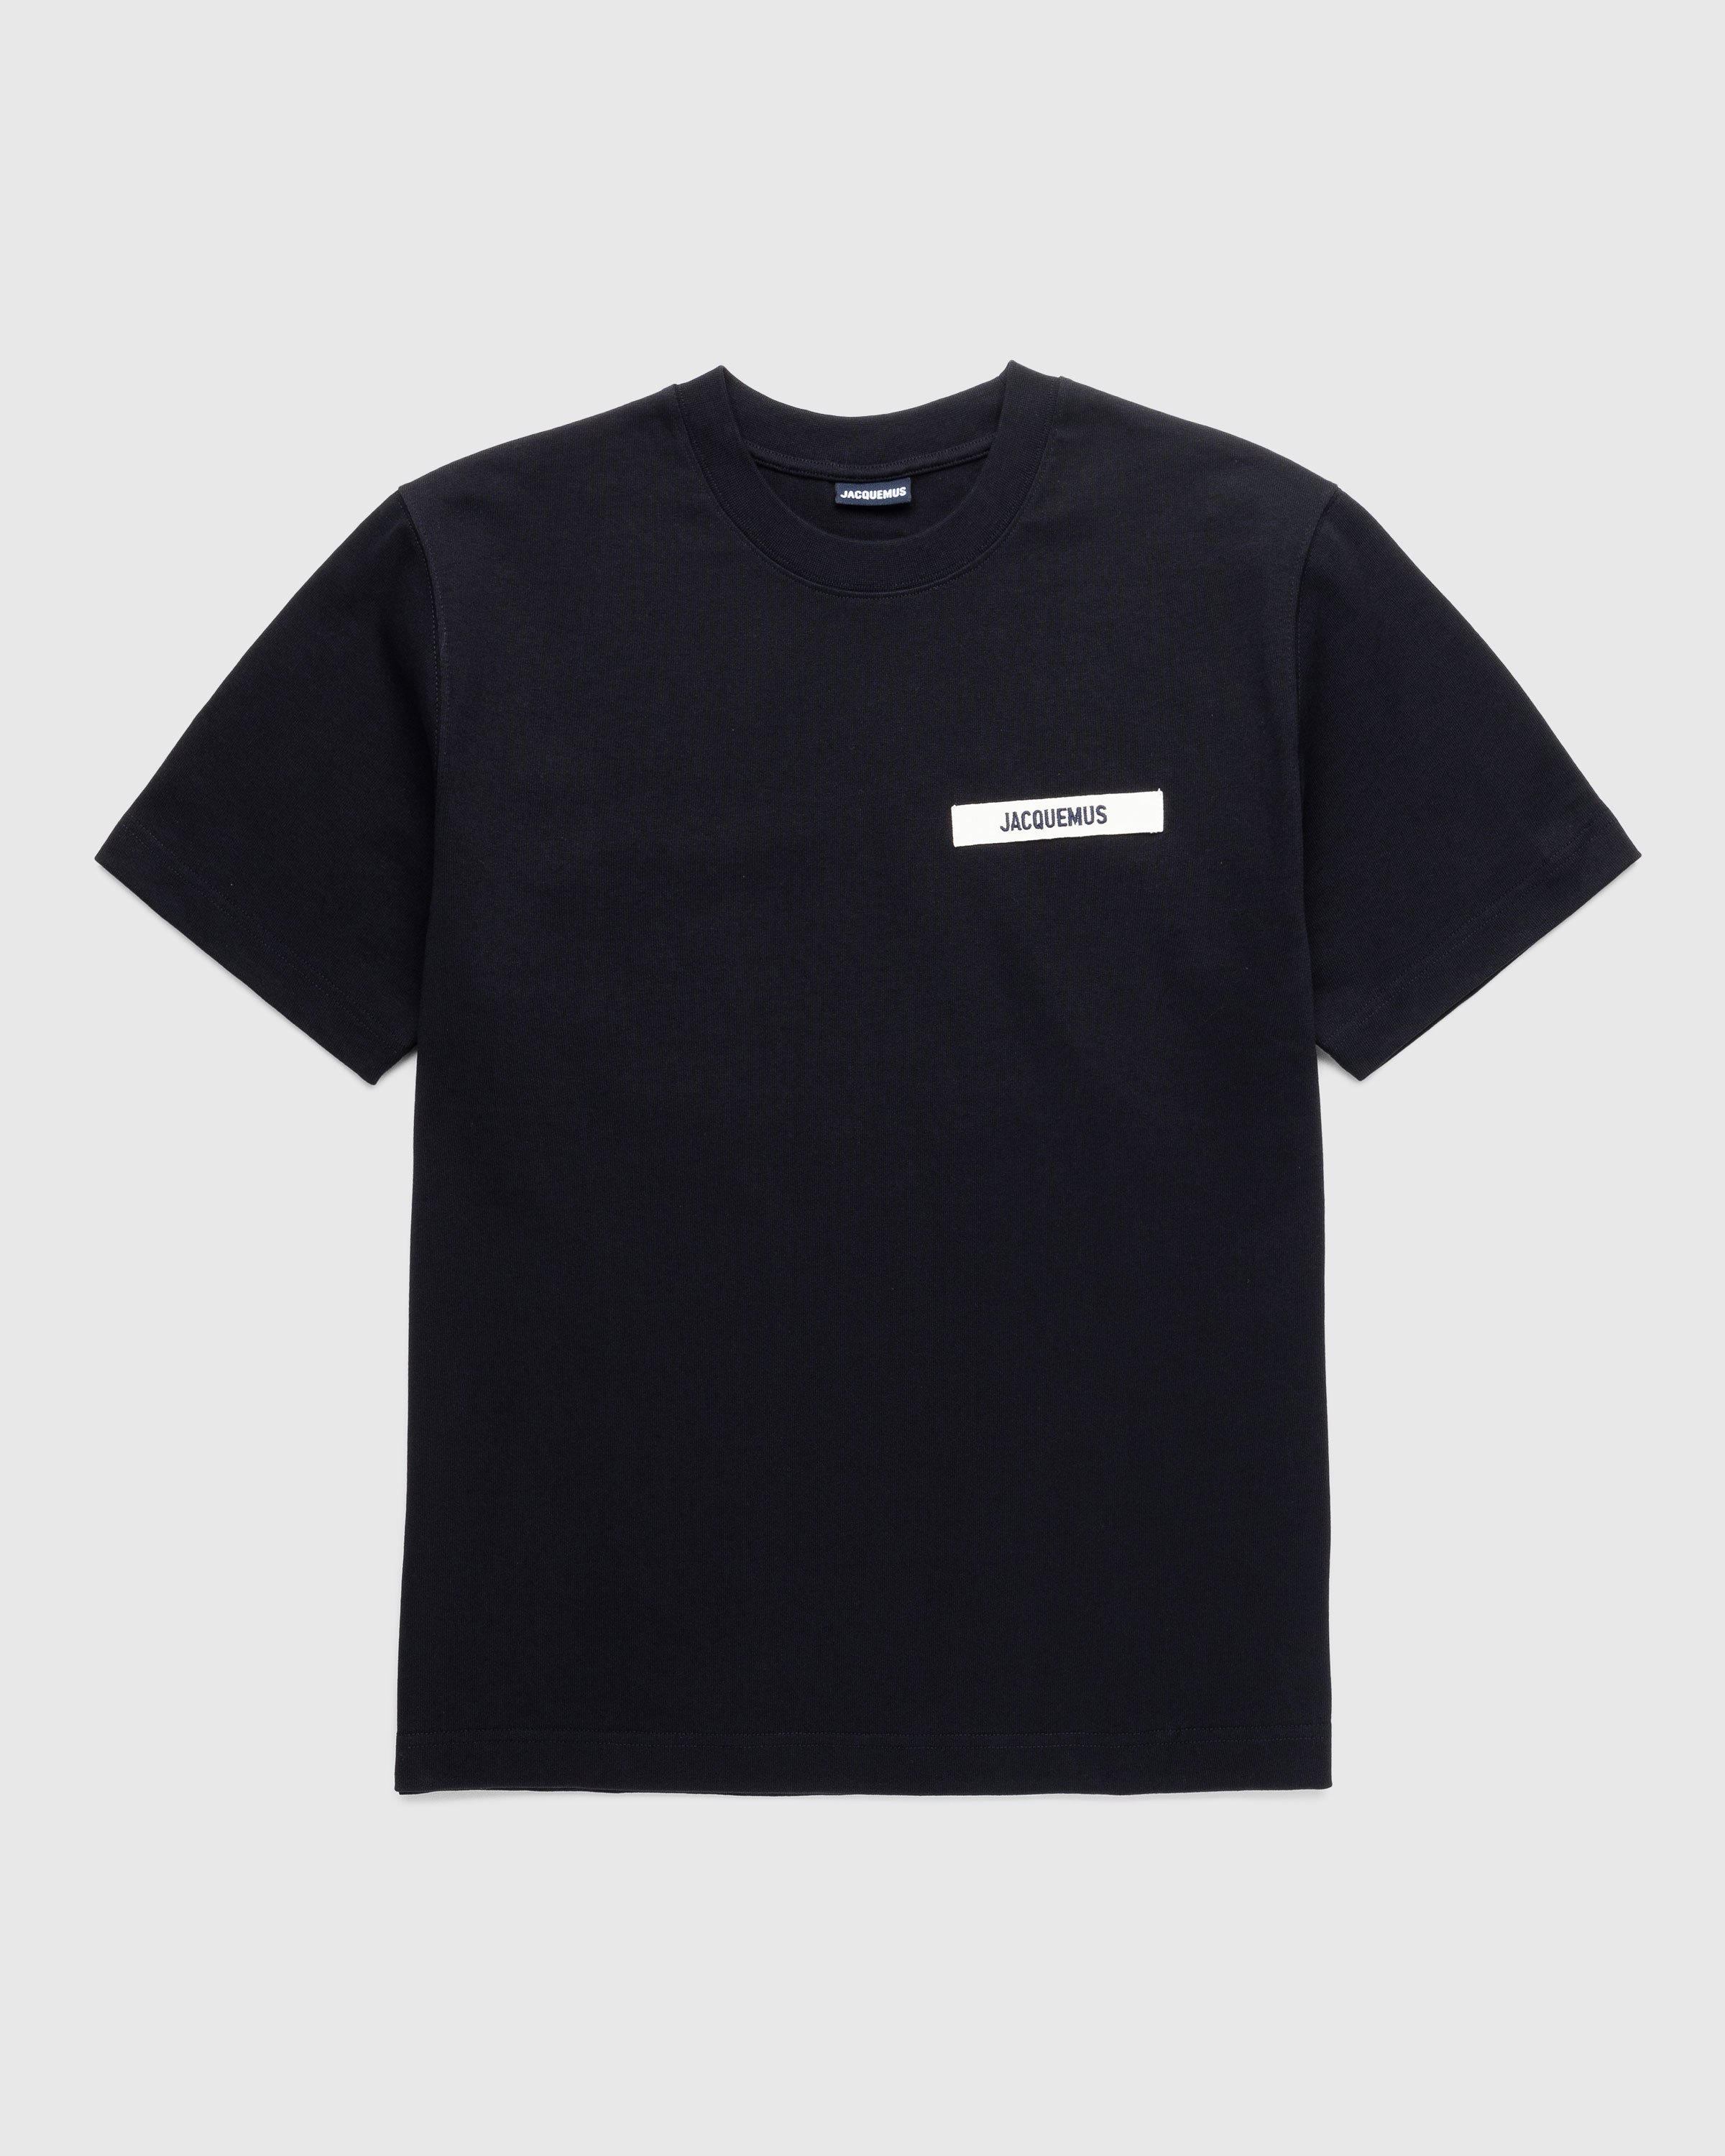 JACQUEMUS - Le T-Shirt Gros Grain Black - Clothing - Black - Image 1